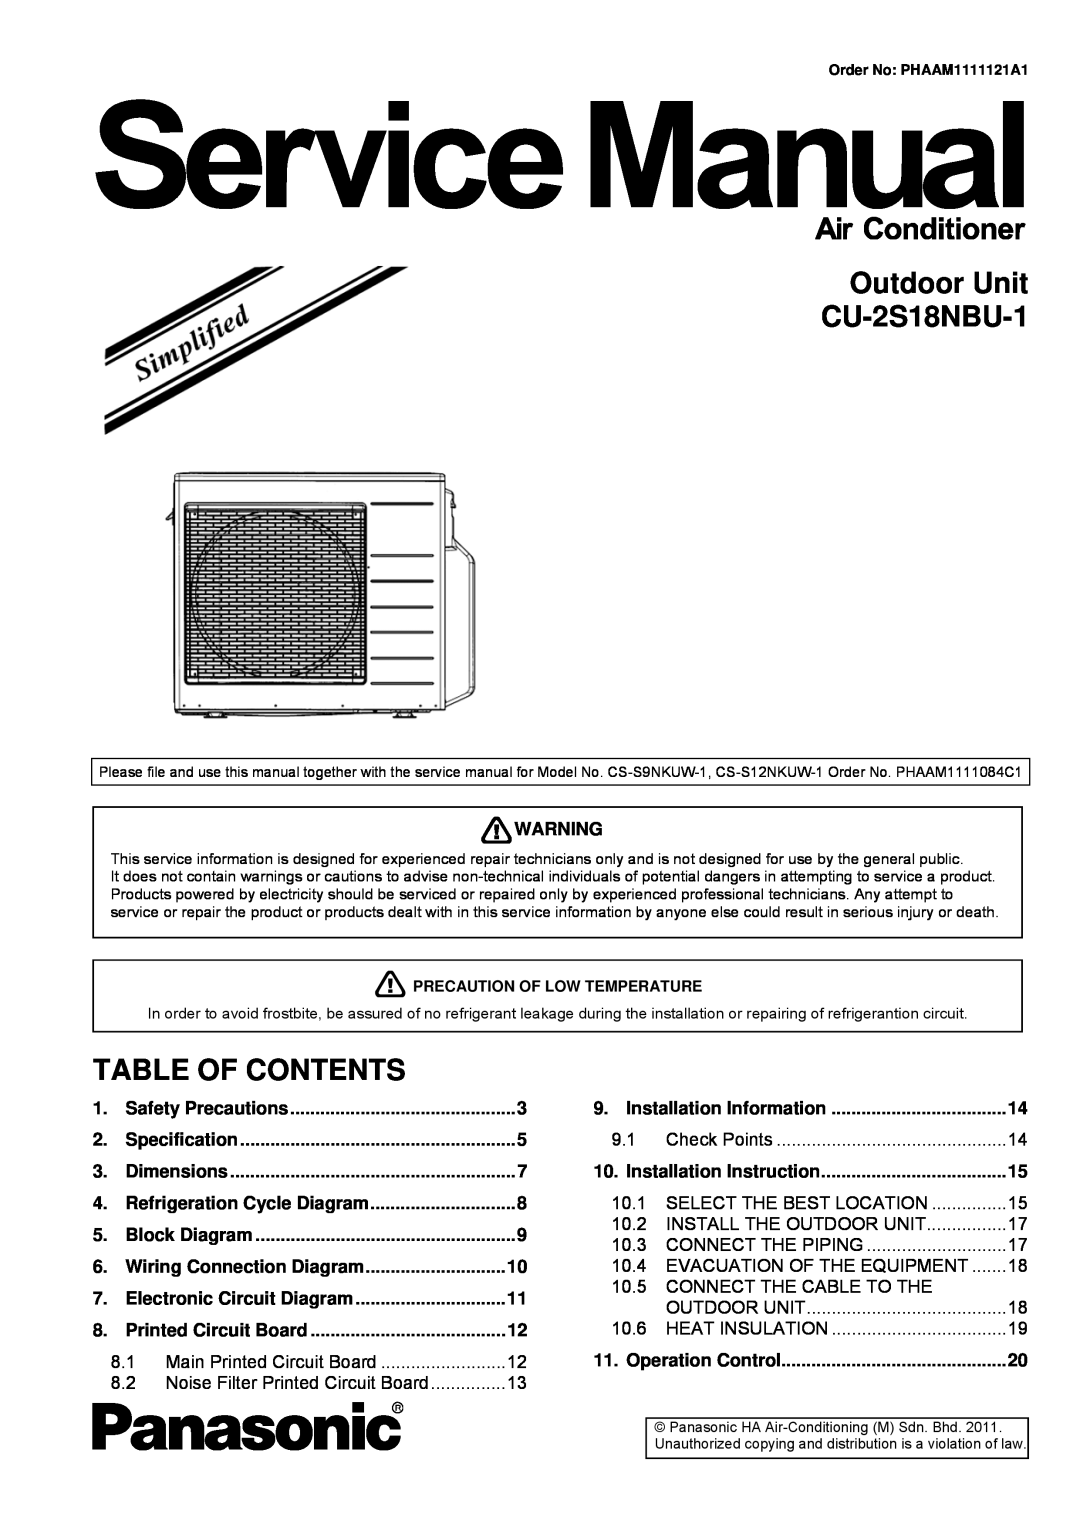 Panasonic service manual Outdoor Unit CU-2S18NBU-1, Table Of Contents, Main Printed Circuit Board 